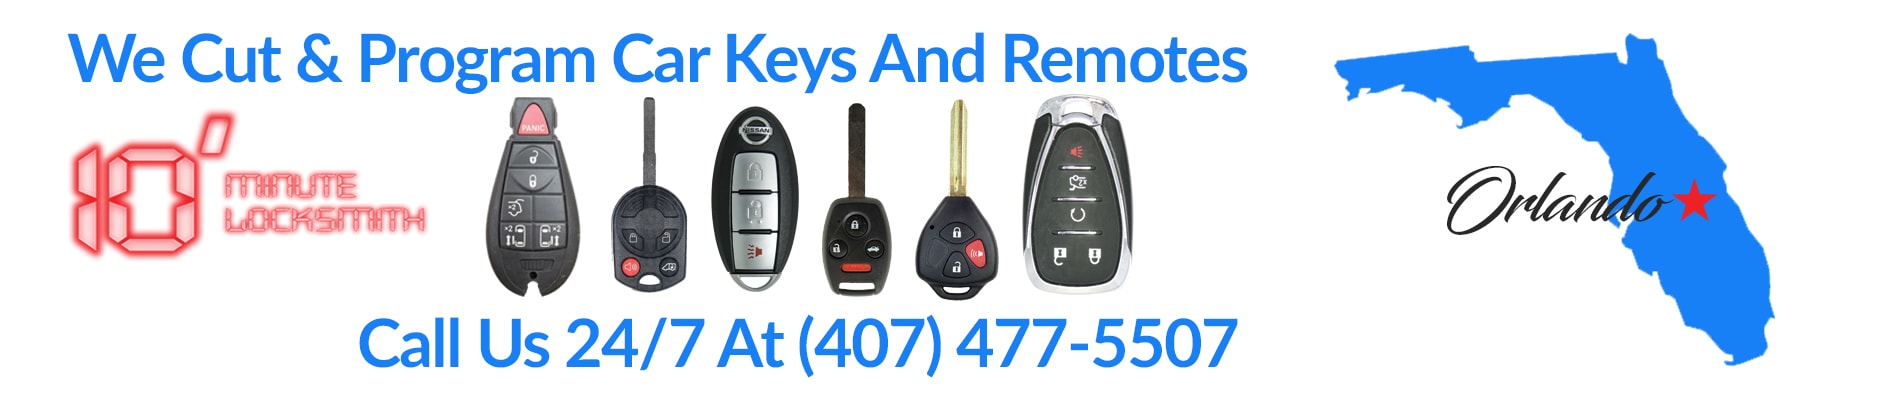 Car keys and more!